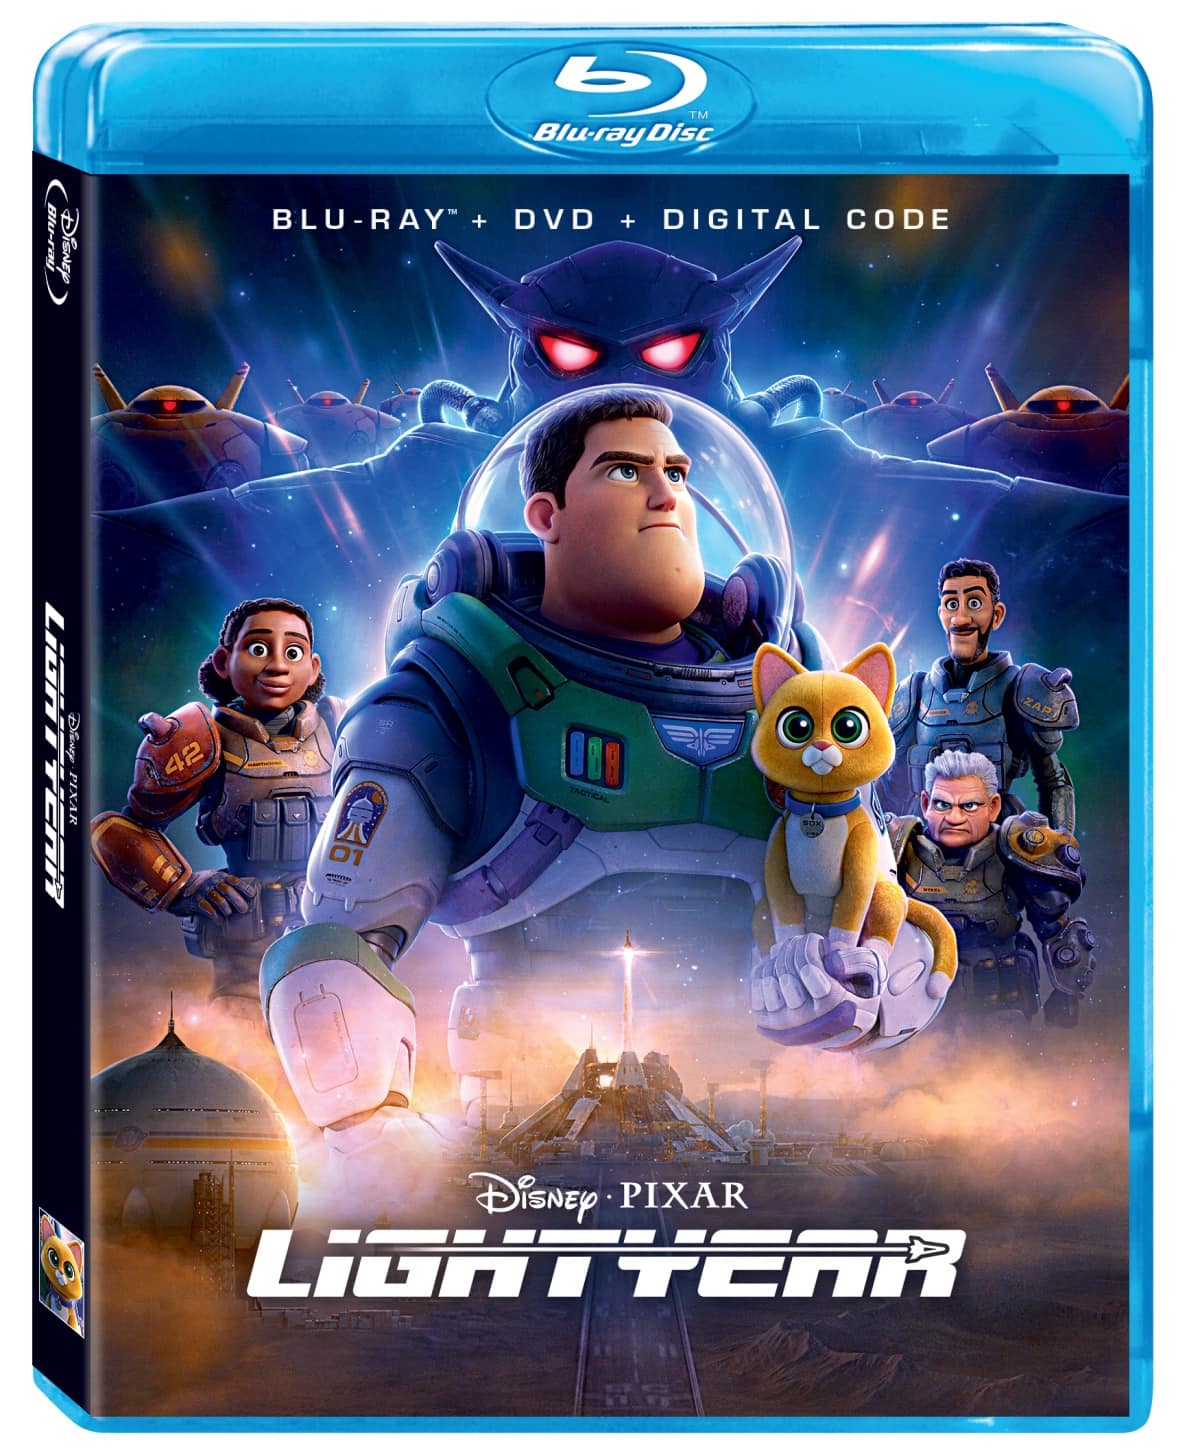 Lightyear bonus offers Blu-ray 4k